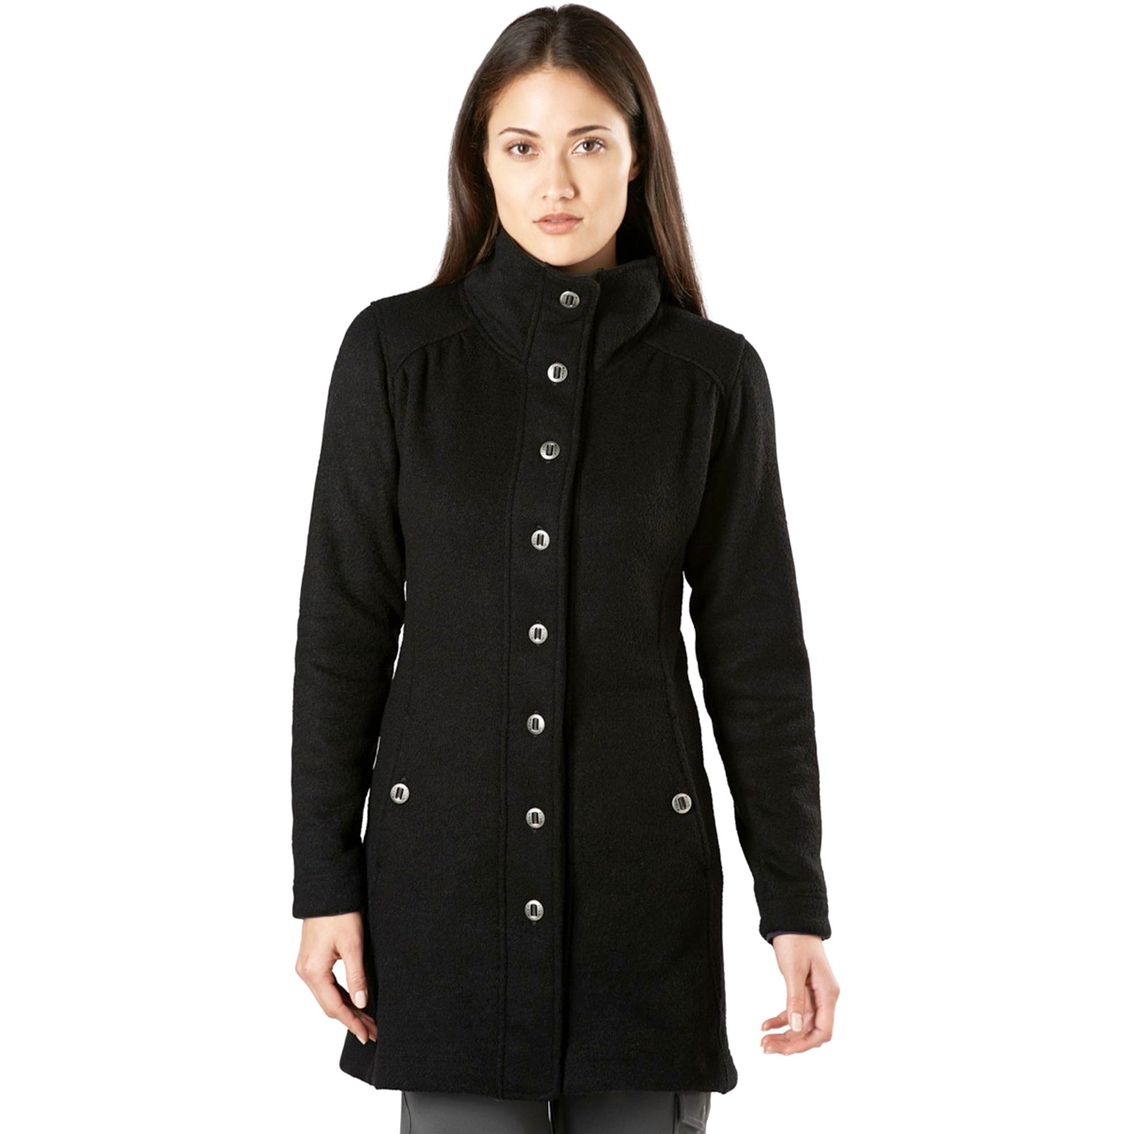 Kuhl Savina Sweater Jacket | Jackets | Apparel | Shop The Exchange